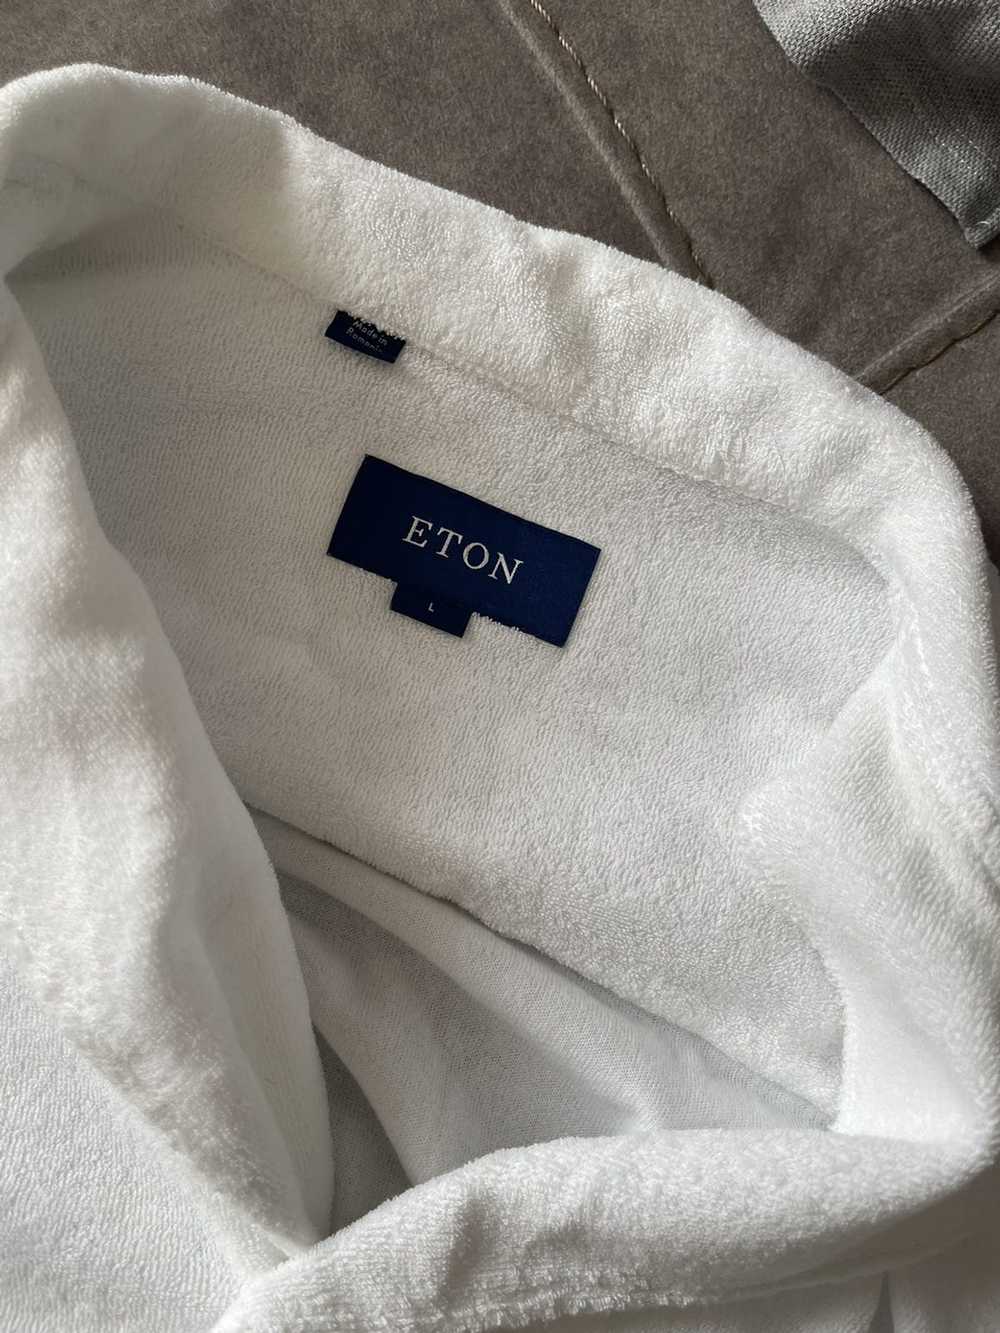 Eton ETON shirt real sizes in photos by tape meas… - image 12